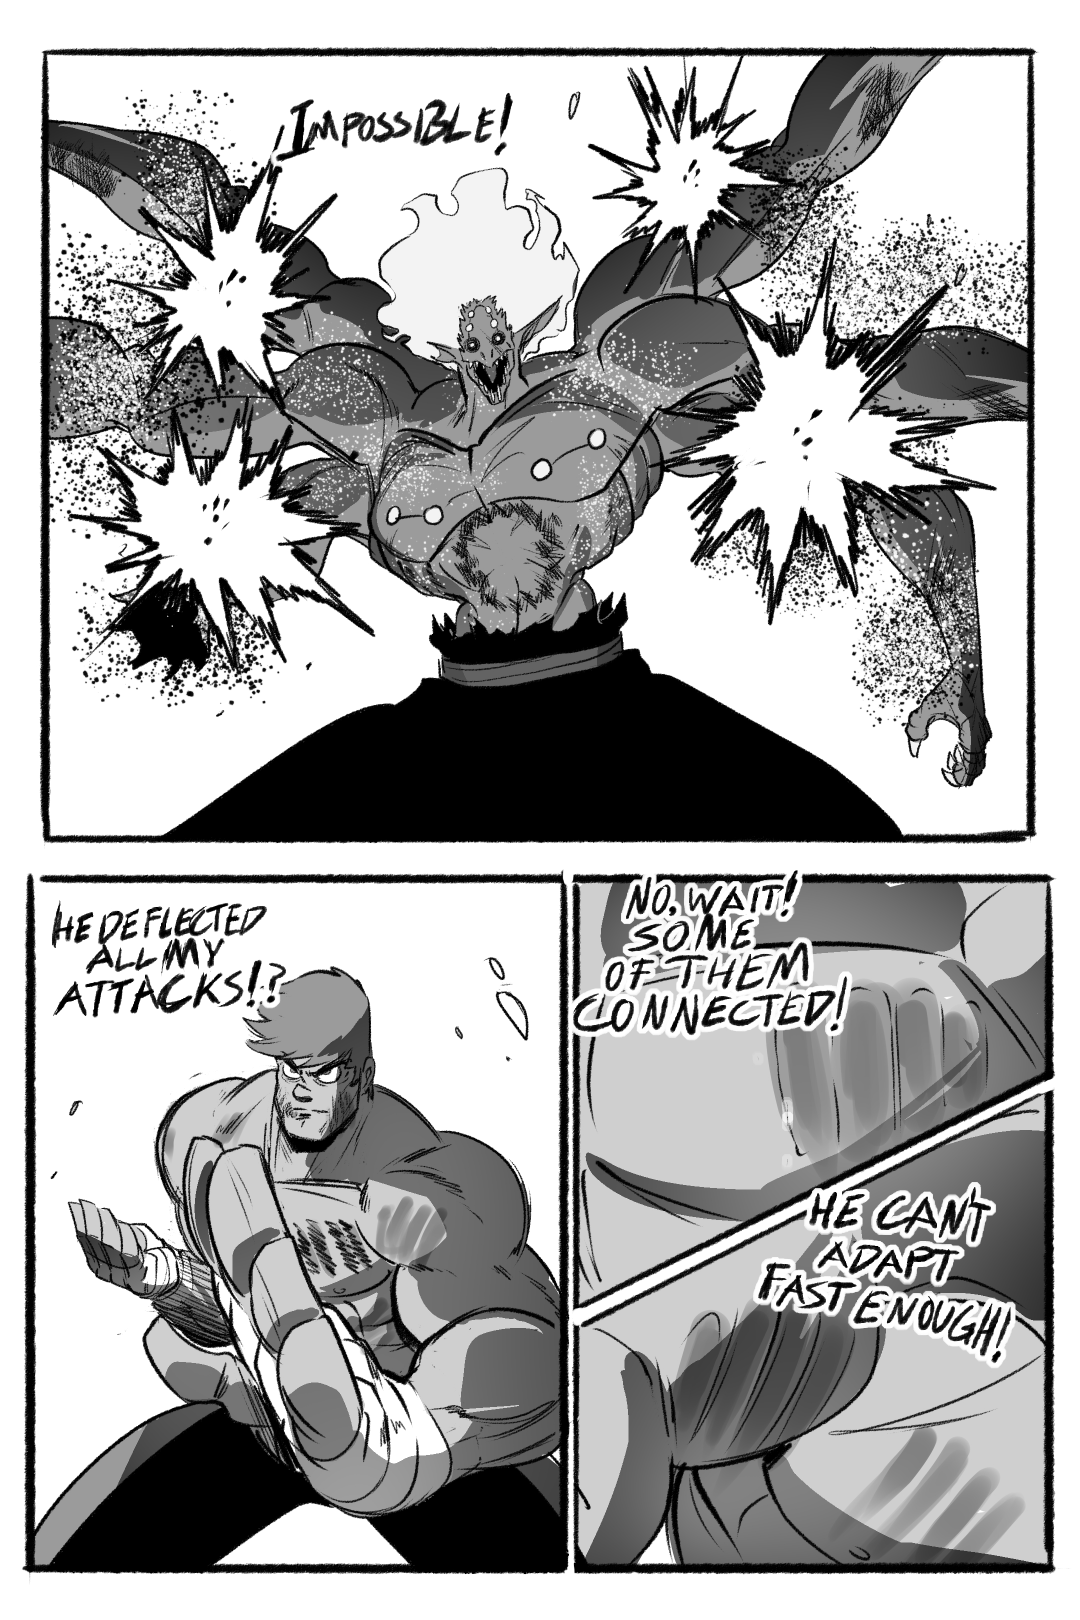 The Showdown Part VI panel 28